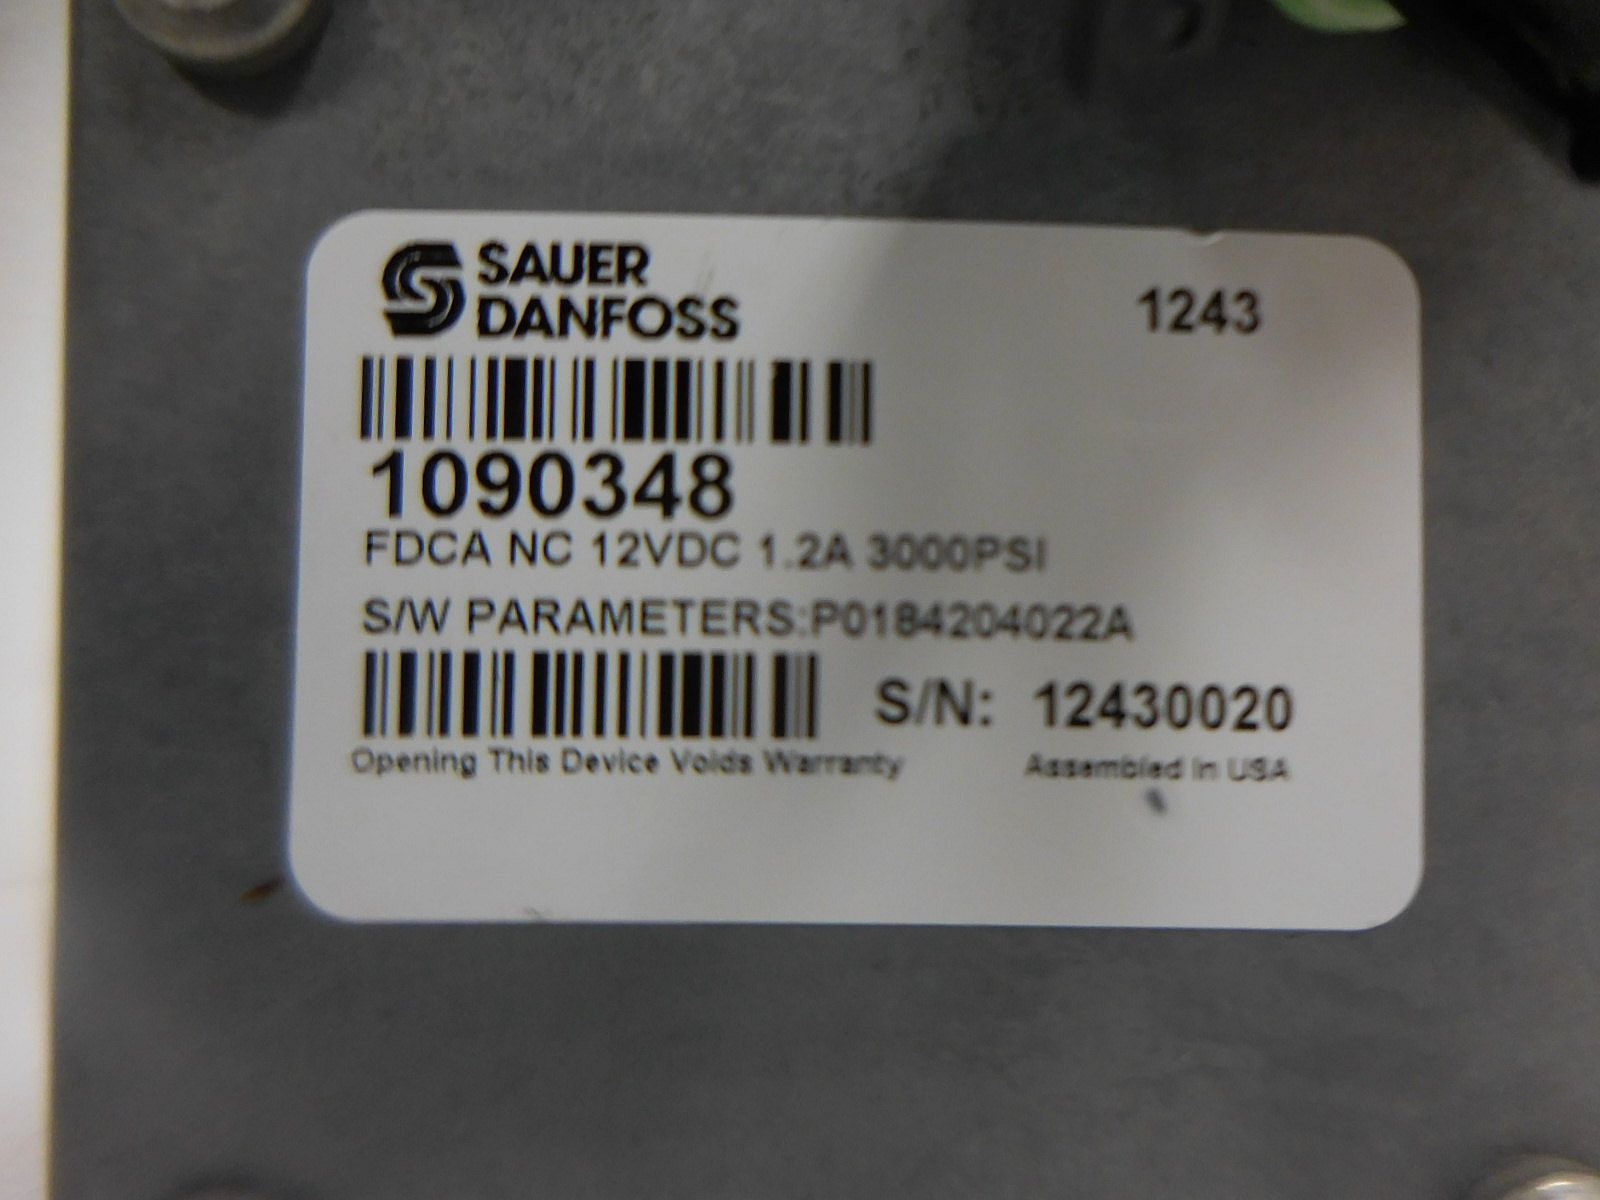 Sauer Danfoss FDCA NC 12 VDC Fan Drive Control 1.2A 3000 Psi 1090348 New